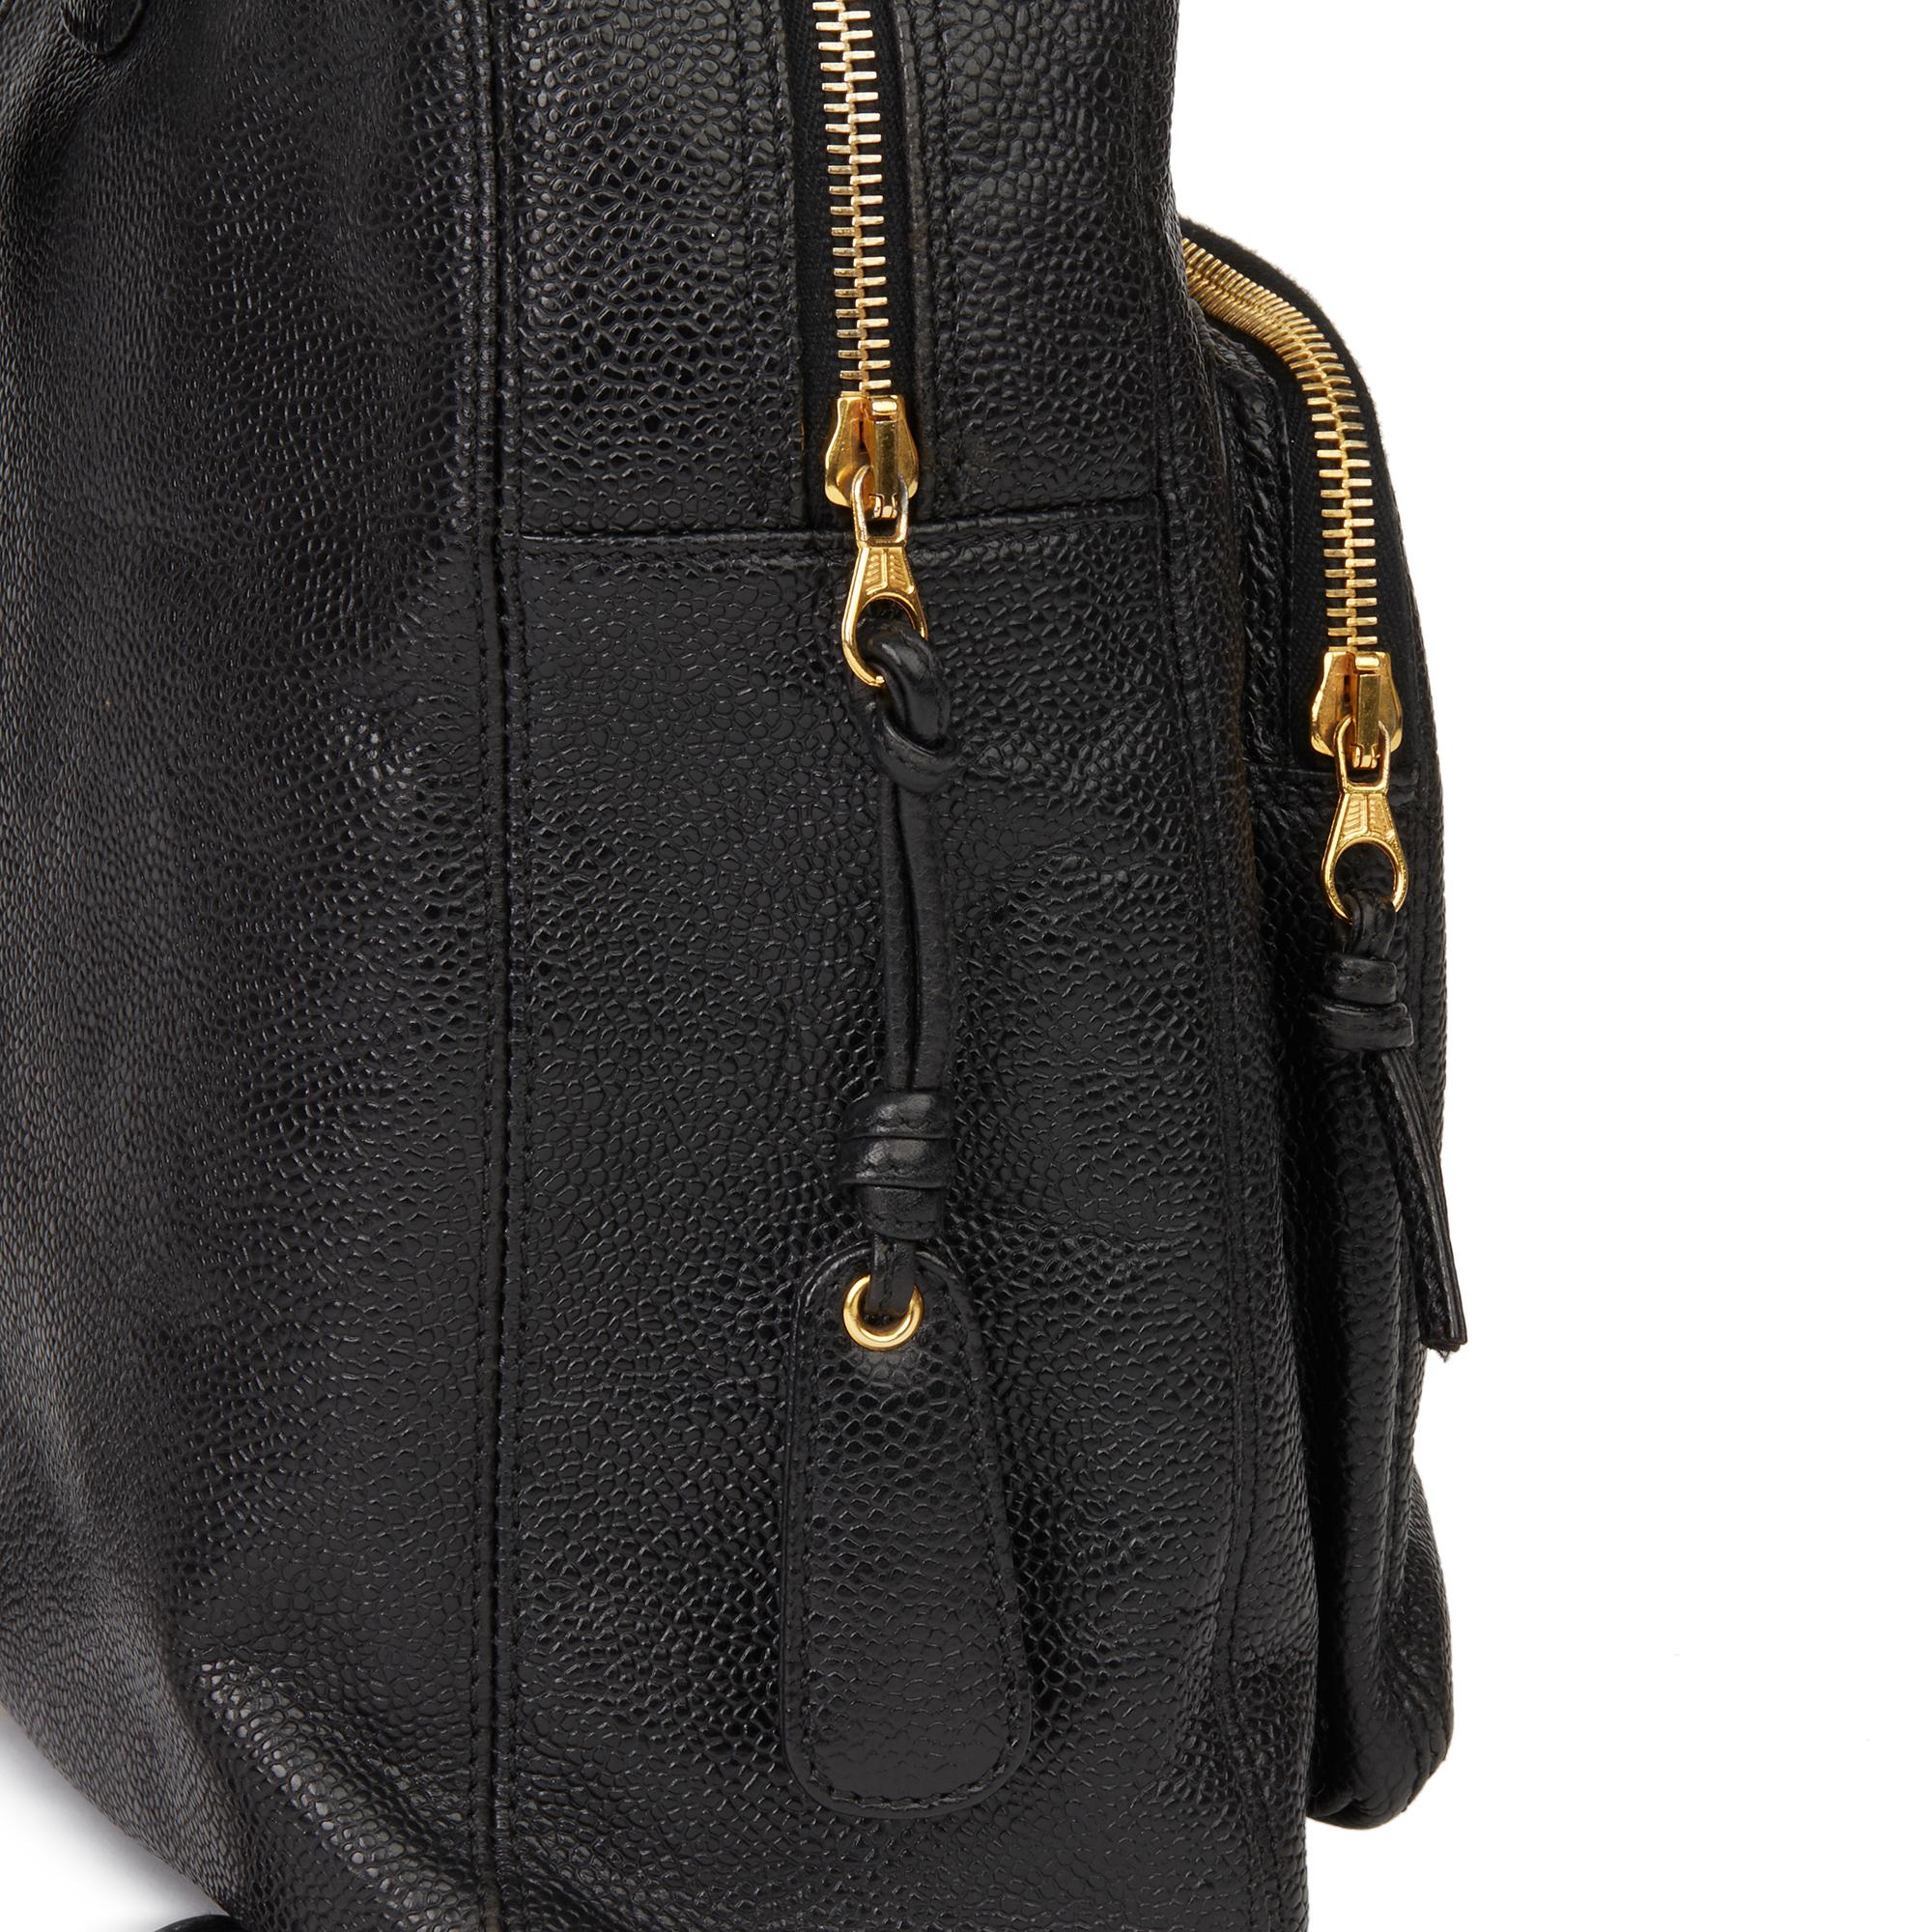 1996 Chanel Black Caviar Leather Vintage Timeless Backpack 4